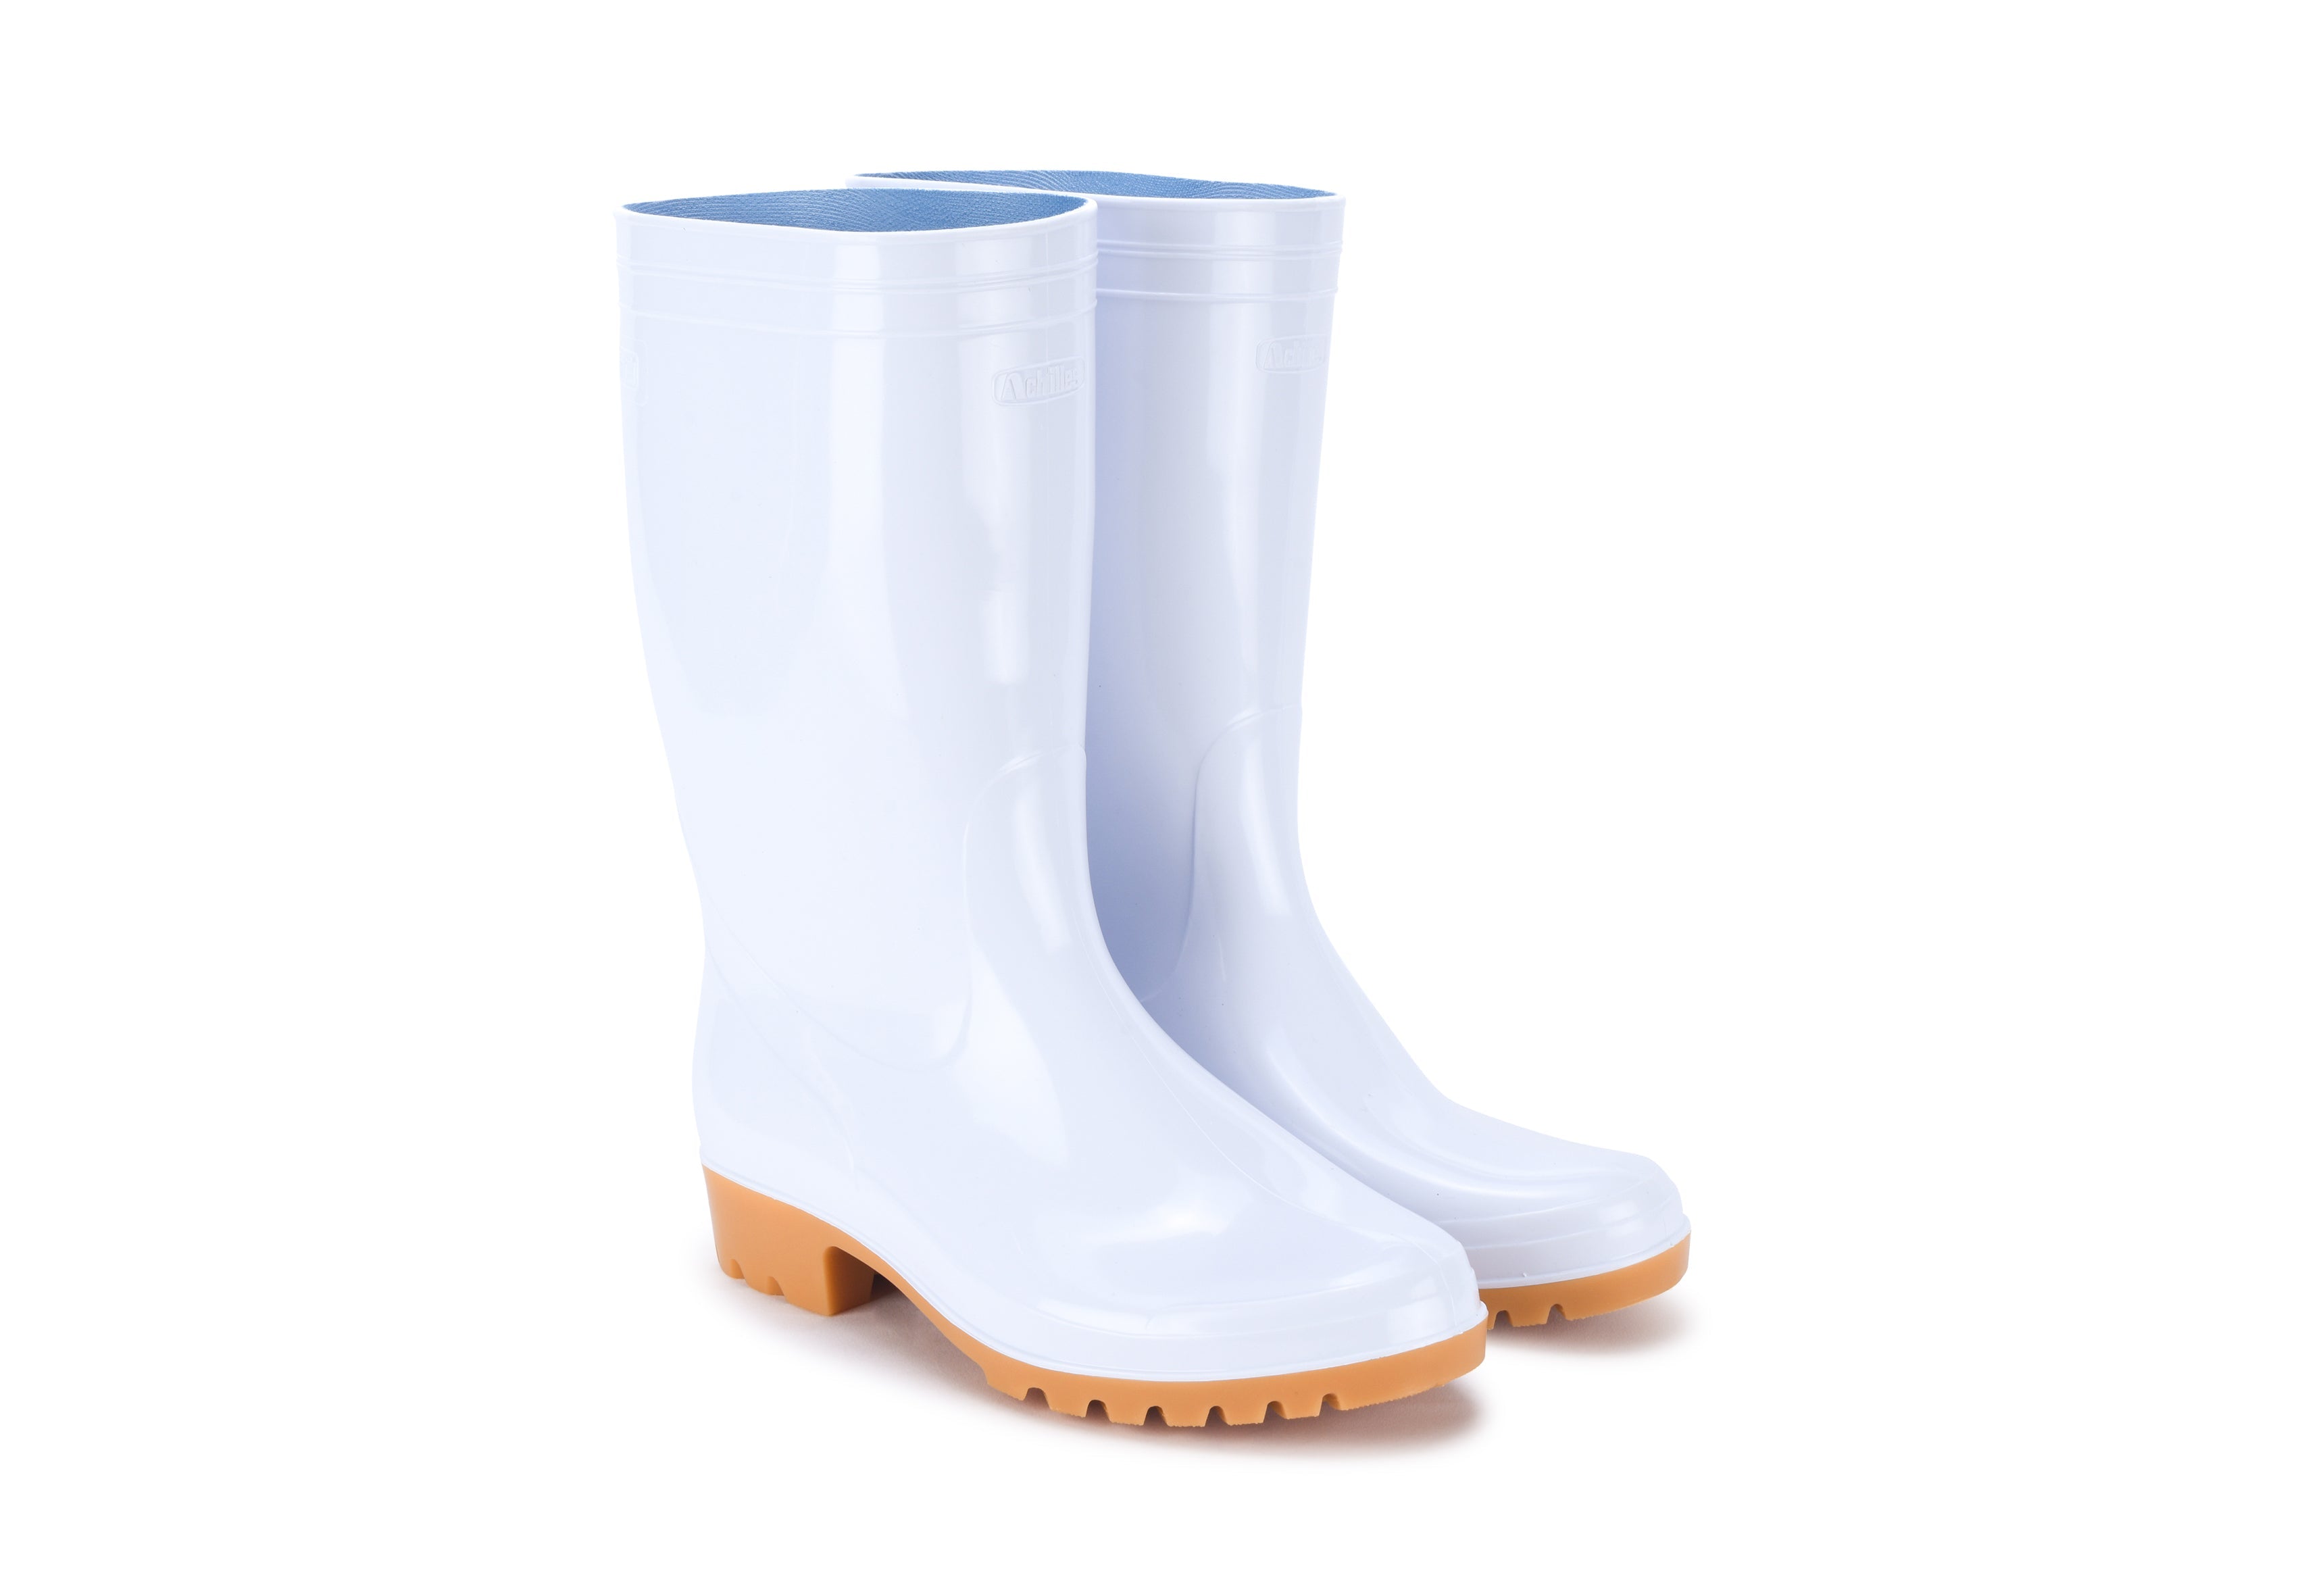 Labor Rain Boots 30cm (Japan Made)-Achilles-WH-JP/TW Size-1: 230-偉豐鞋 WELL SHOE HK-Well Shoe-偉豐鞋-偉豐網-荃灣鞋店-Functional shoes-Hong Kong Tsuen Wan Shoe Store-Tai Wan Shoe-Japan Shoe-高品質功能鞋-台灣進口鞋-日本進口鞋-High-quality shoes-鞋類配件-荃灣進口鞋-香港鞋店-優質鞋類產品-水靴-帆布鞋-廚師鞋-香港鞋品牌-Hong Kong Shoes brand-長者鞋-Hong Kong Rain Boots-Kitchen shoes-Cruthes-Slipper-Well Shoe Hong Kong-Anello-Arriba-休閒鞋-舒適鞋-健康鞋-皮鞋-Healthy shoes-Leather shoes-Hiking shoes